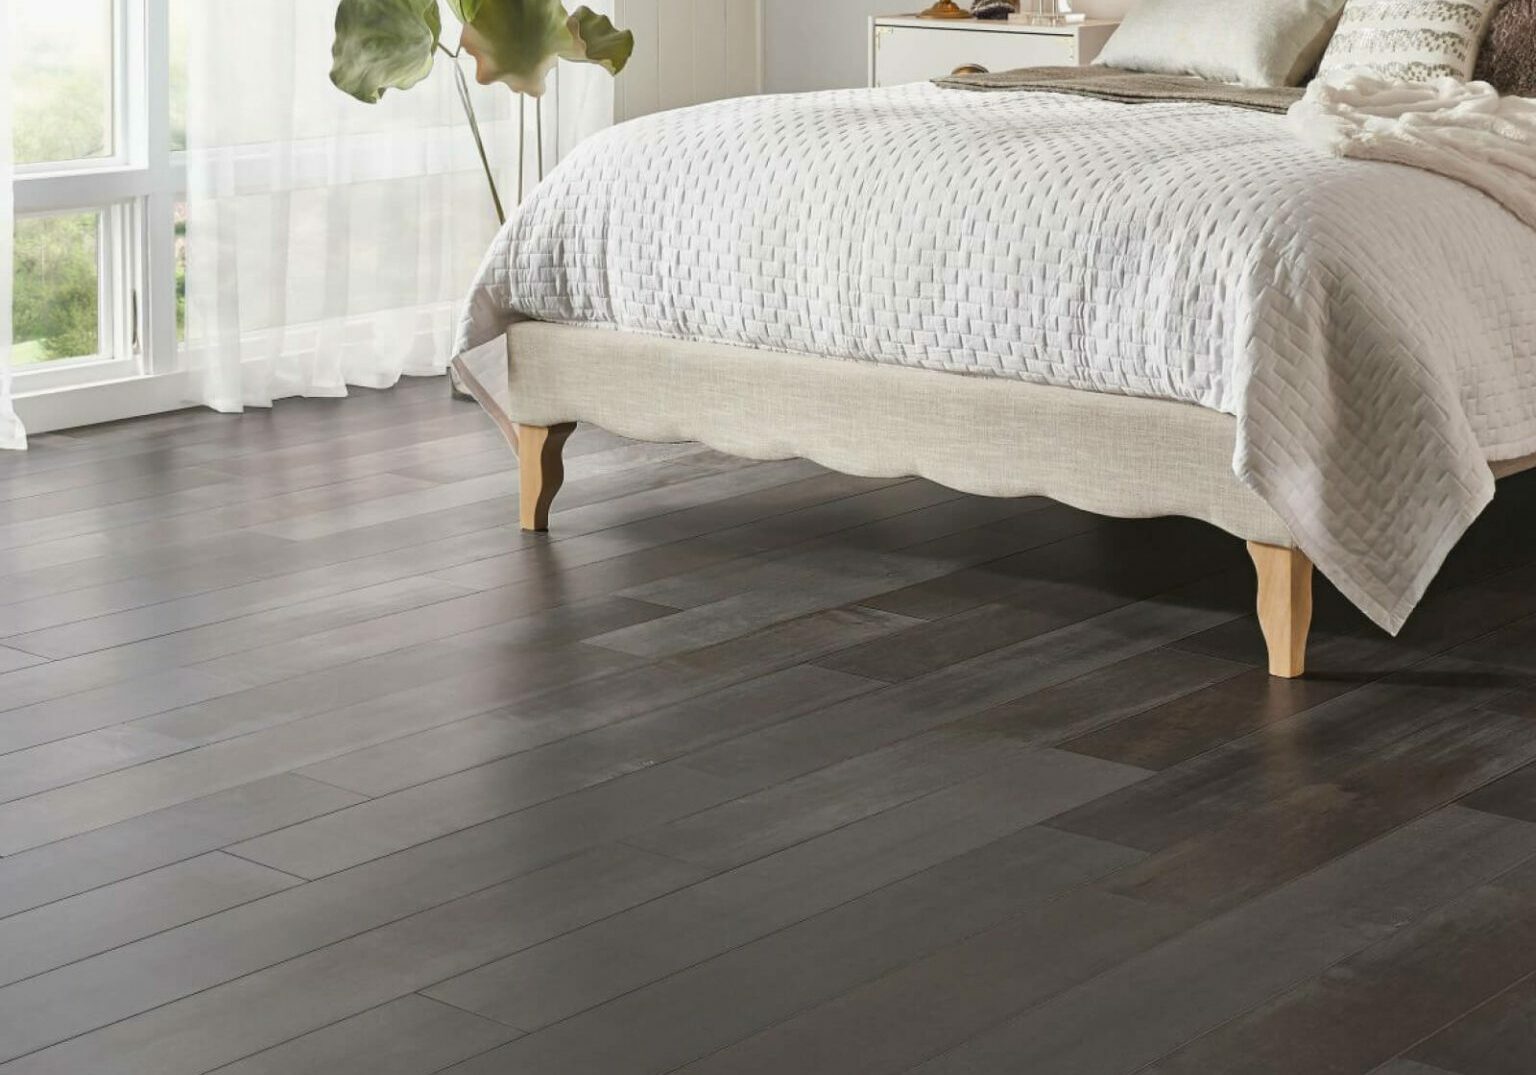 Dark hardwood flooring in bedroom | Pierce Carpet Mill Outlet